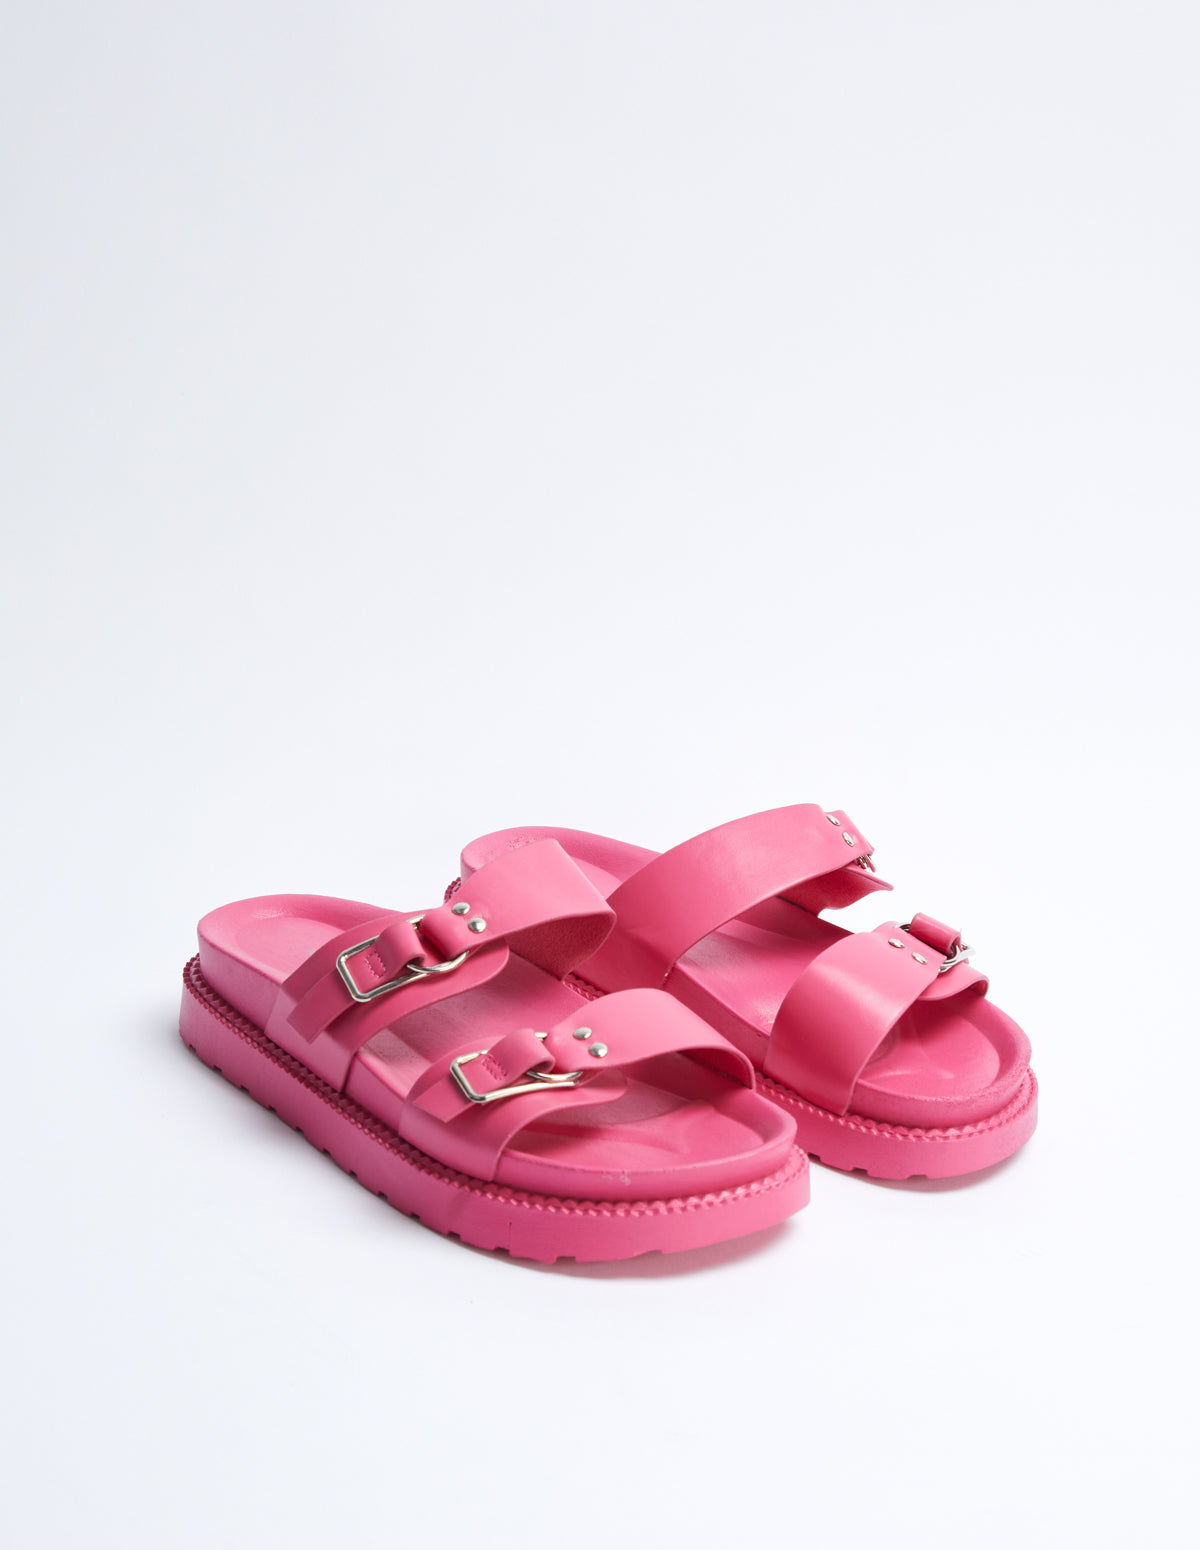 Two Strap Buckle Sandals - Jun